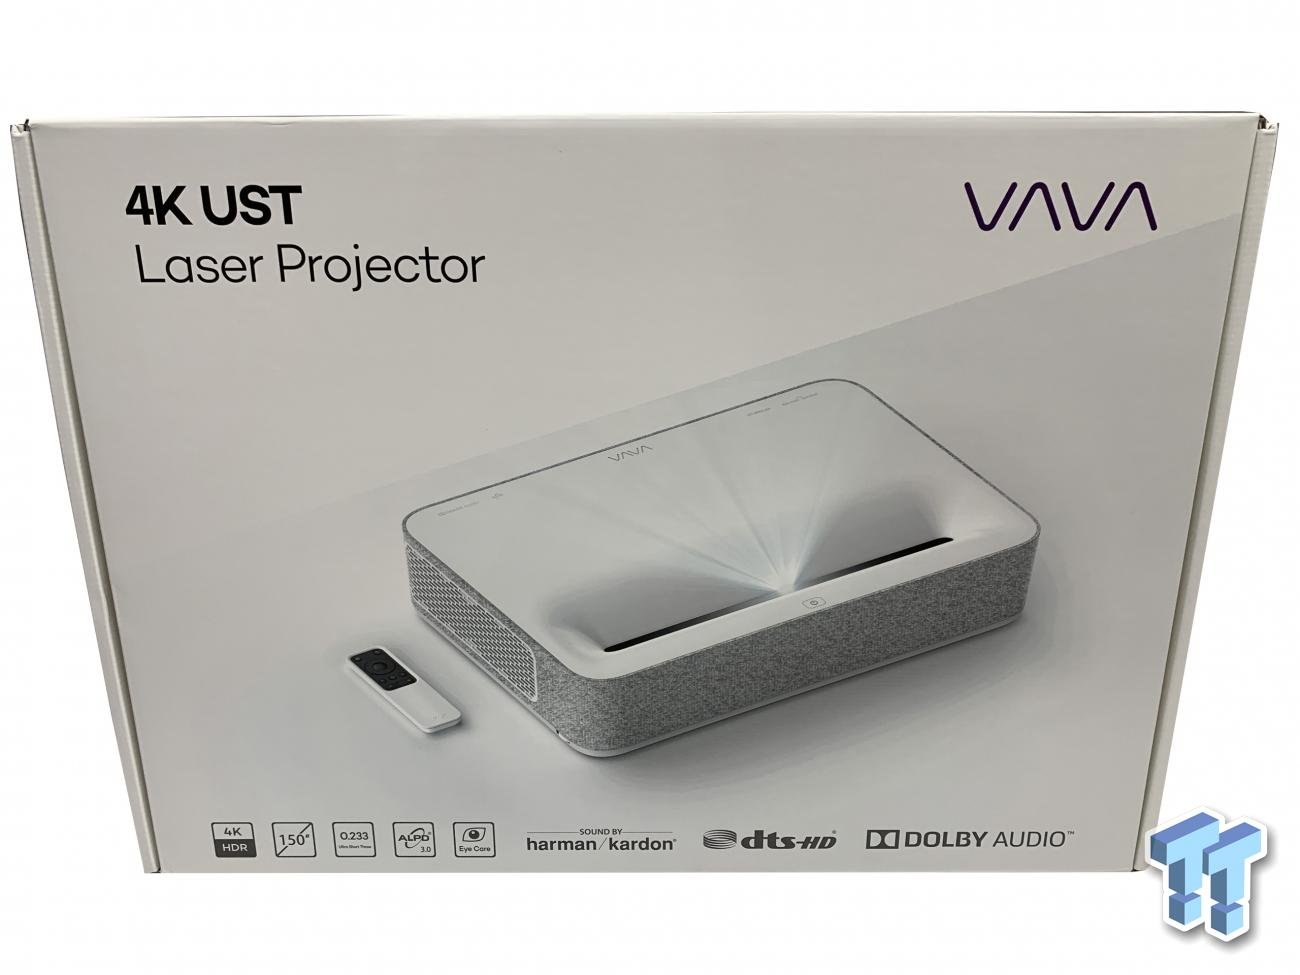 VAVA UST 4K Laser Projector Review